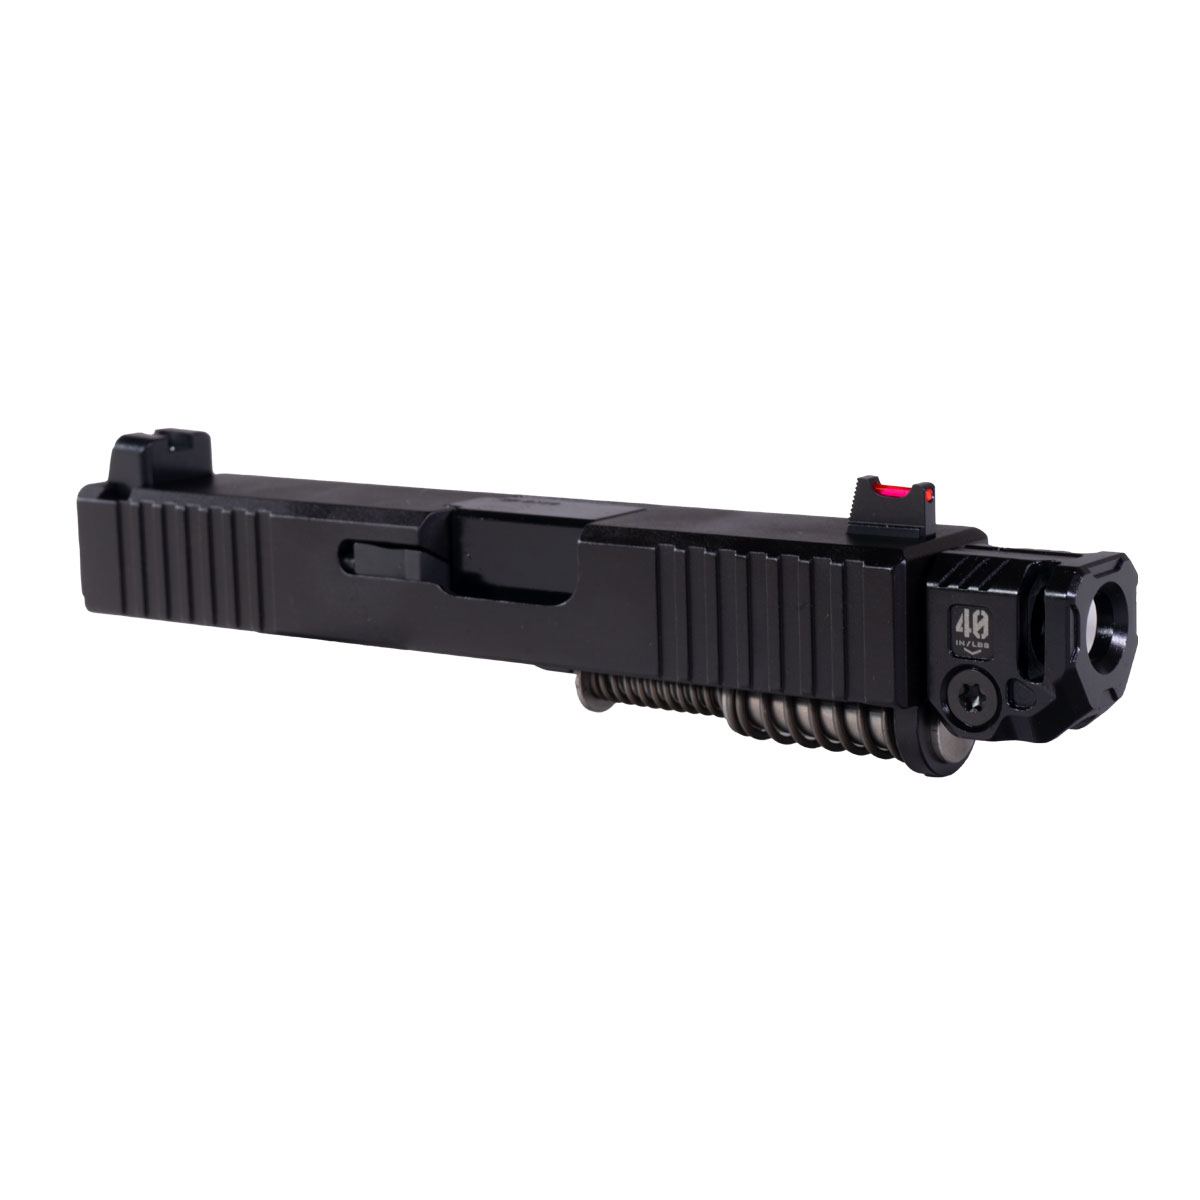 DTT 'Twenty-six w/ Strike Industries Compensator' 9mm Complete Slide Kit - Glock 26 Gen 1-2 Compatible